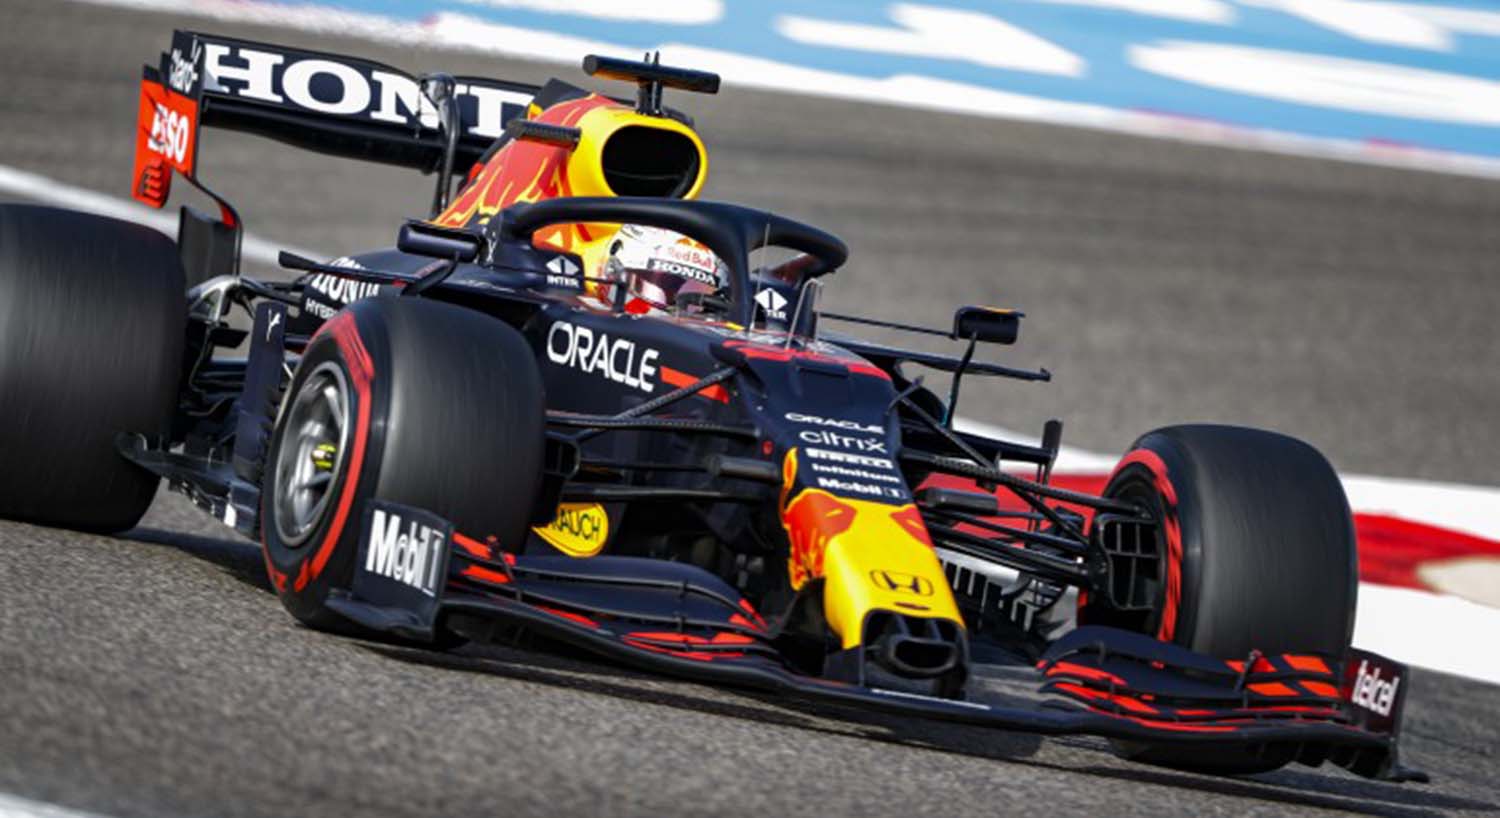 F1 – Verstappen Quickest In Final Practice For Bahrain Grand Prix